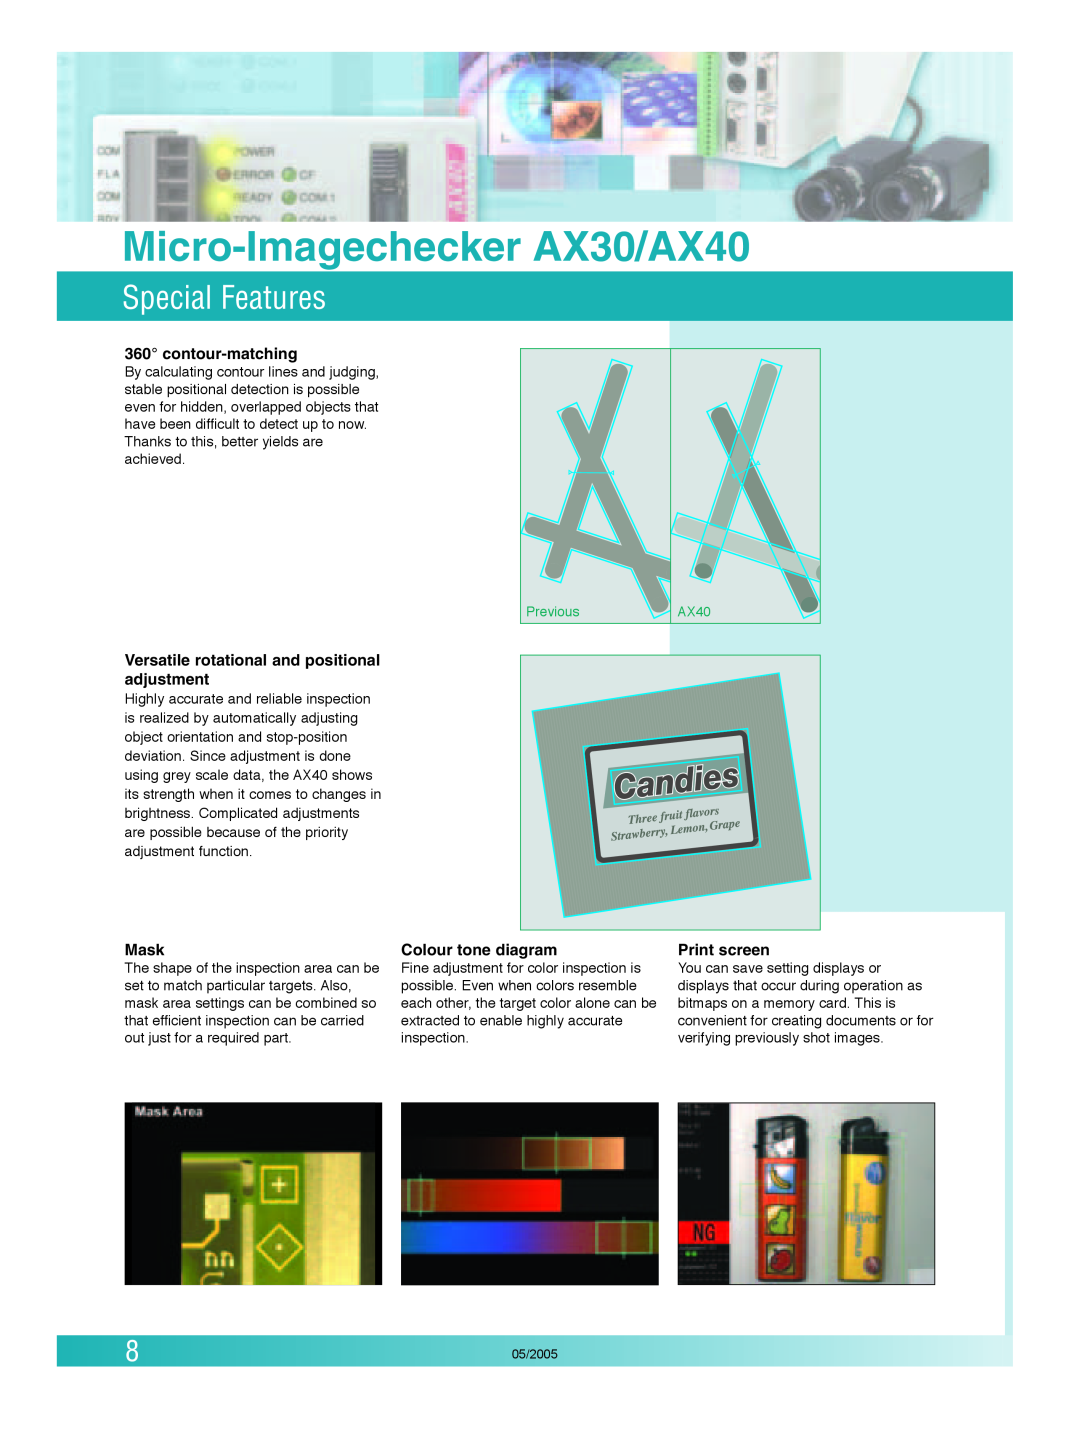 Panasonic Special Features, Micro-Imagechecker AX30/AX40, contour-matching, Mask, Colour tone diagram, Print screen 